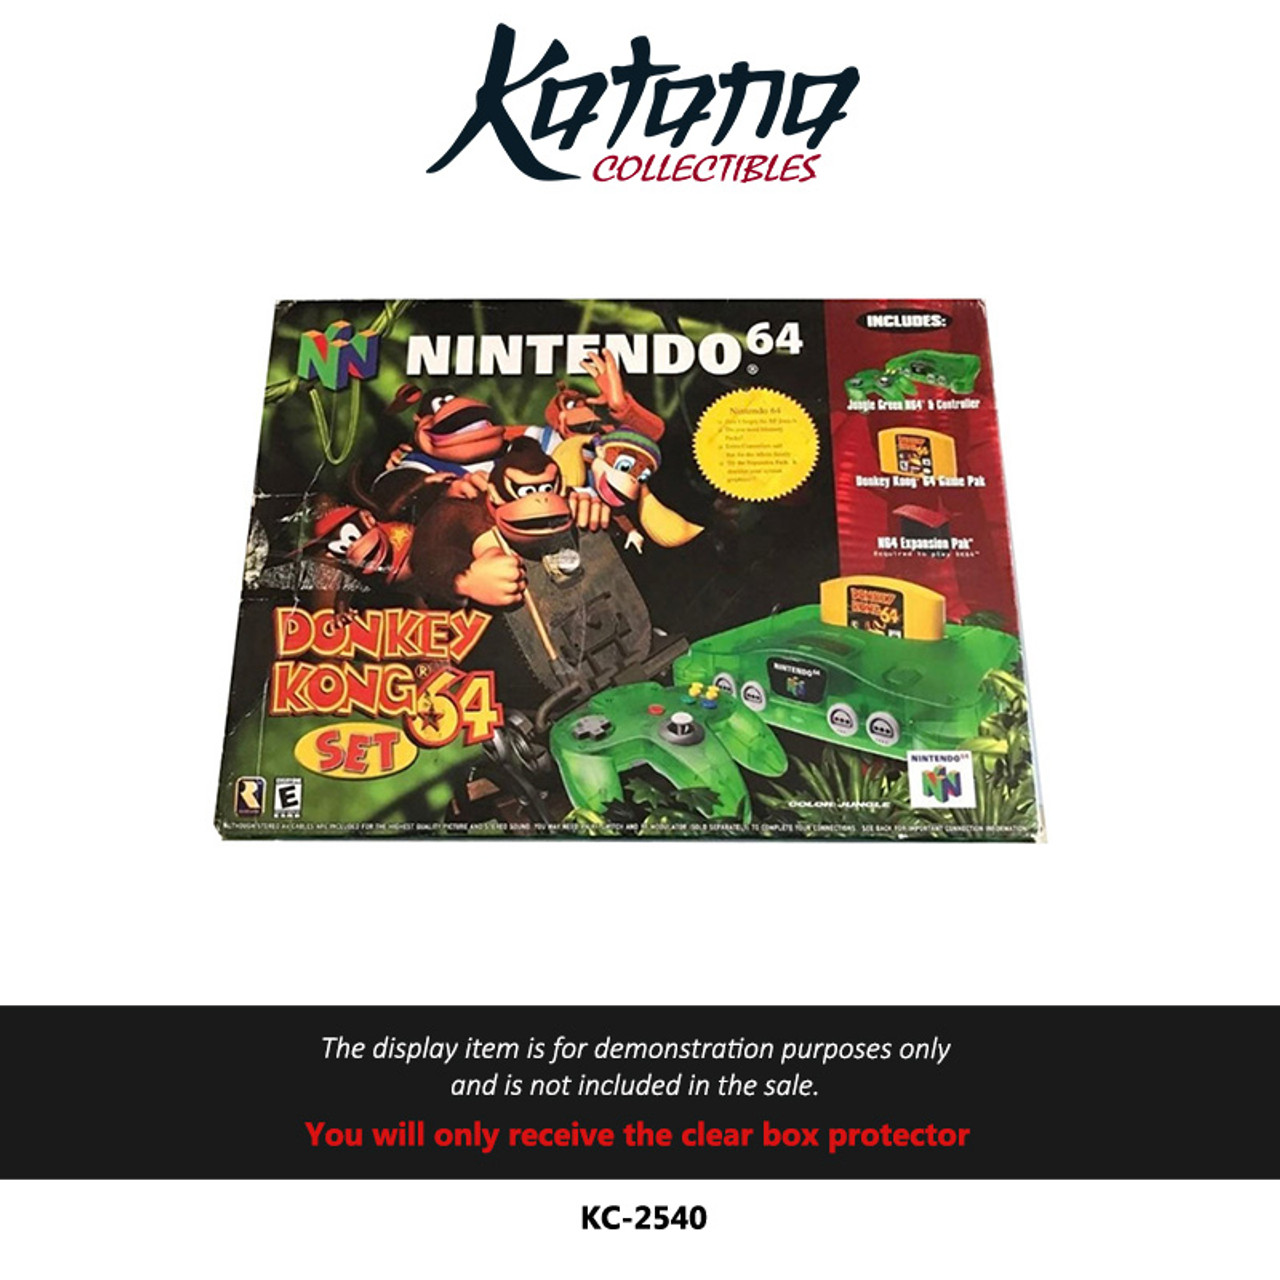 Katana Collectibles Protector For Nintendo 64 - Donkey Kong Set